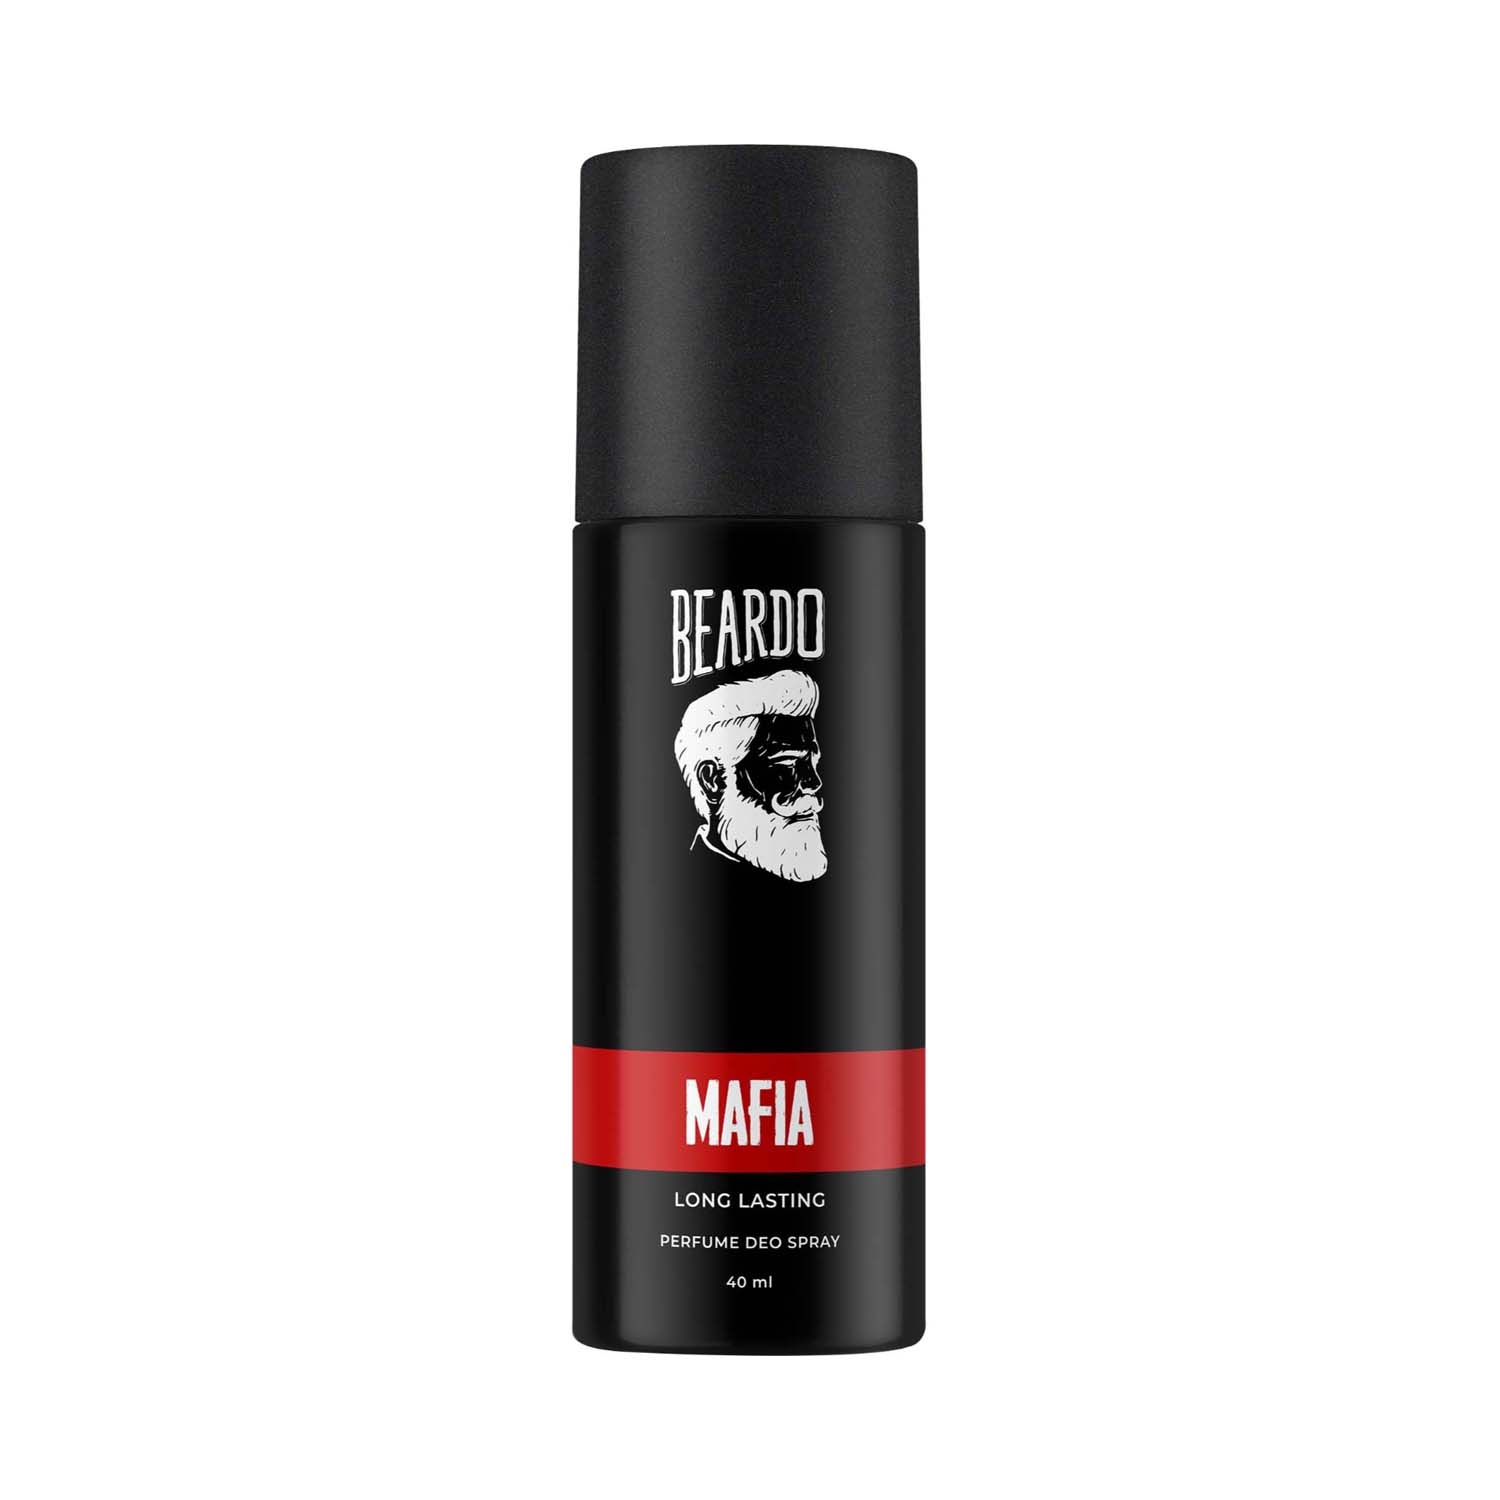 Beardo Mafia Perfume Deodorant Body Spray (40ml)